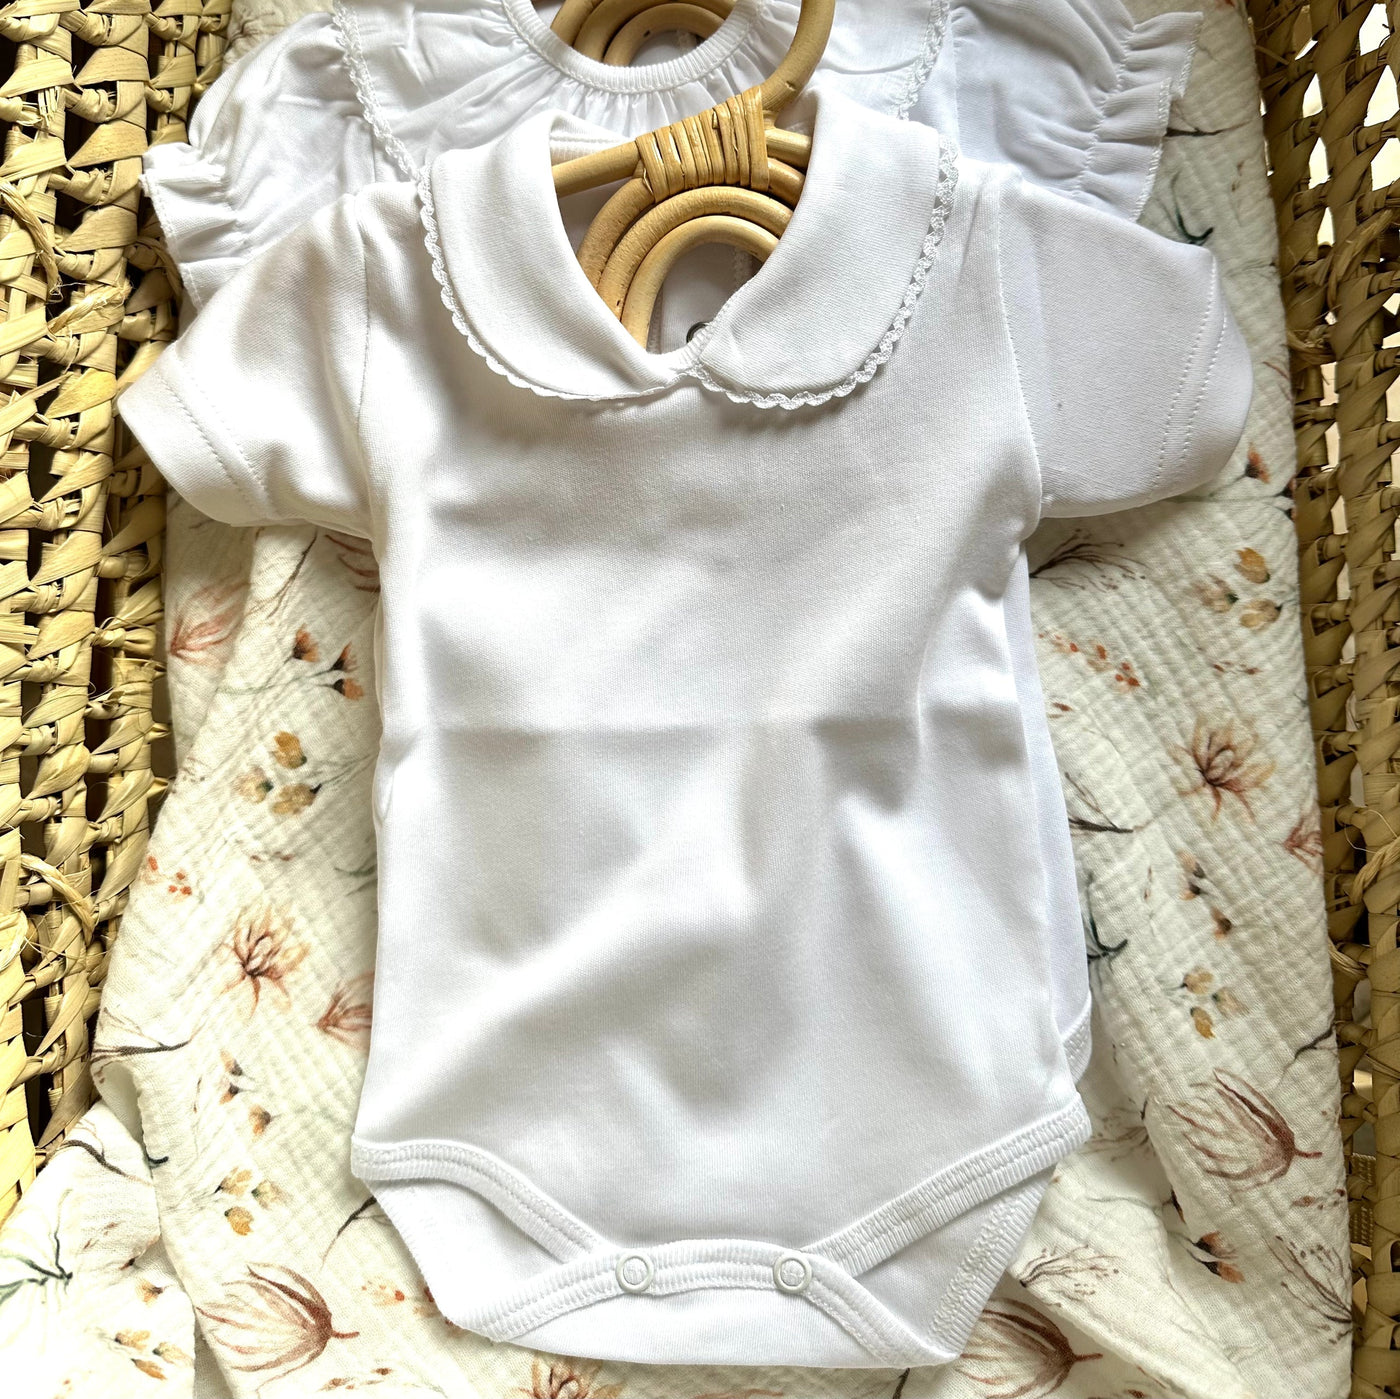 Body in Cotone Manica Corta baby - Baby Clothes - Baby Rainbow Shop - P.IVA 04847500230